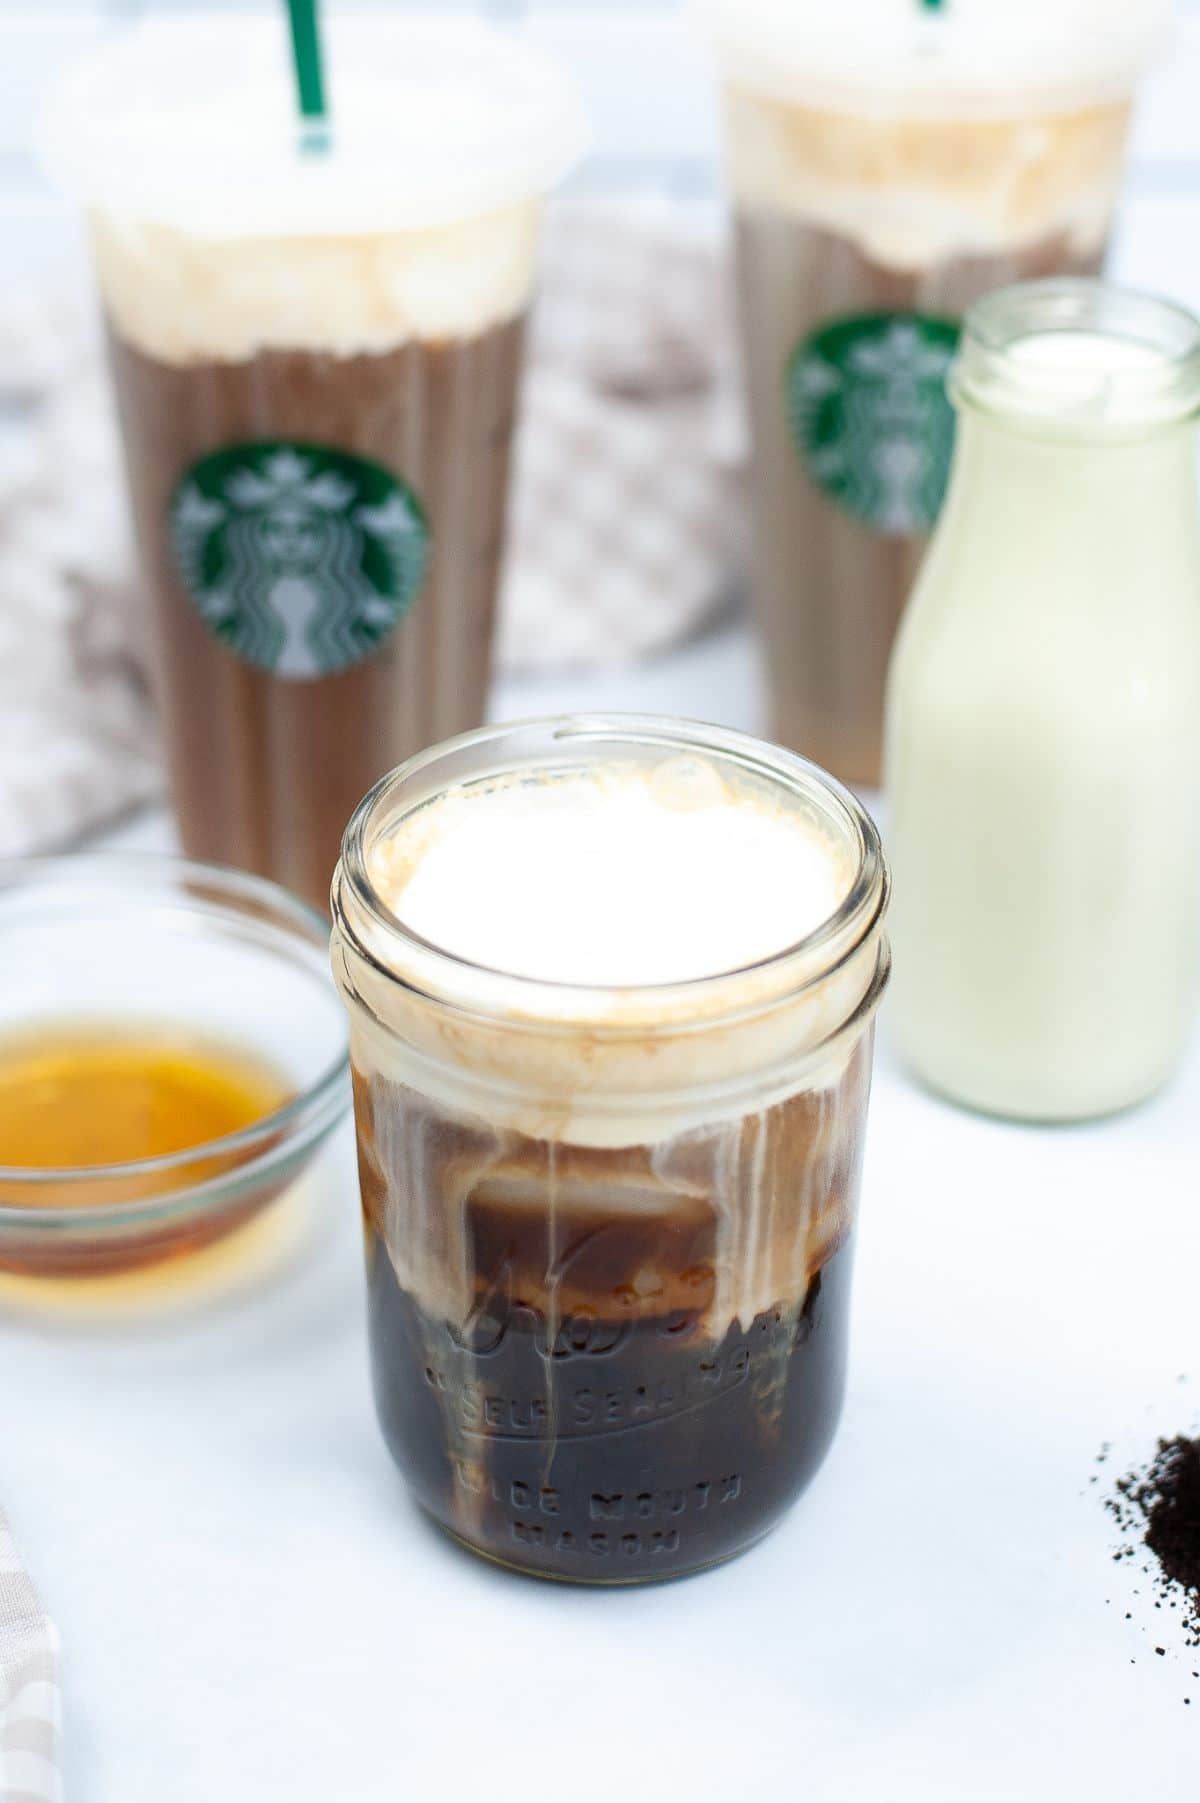 How to Make Cold Foam (Starbucks Sweet Cream Copycat) - TSRI